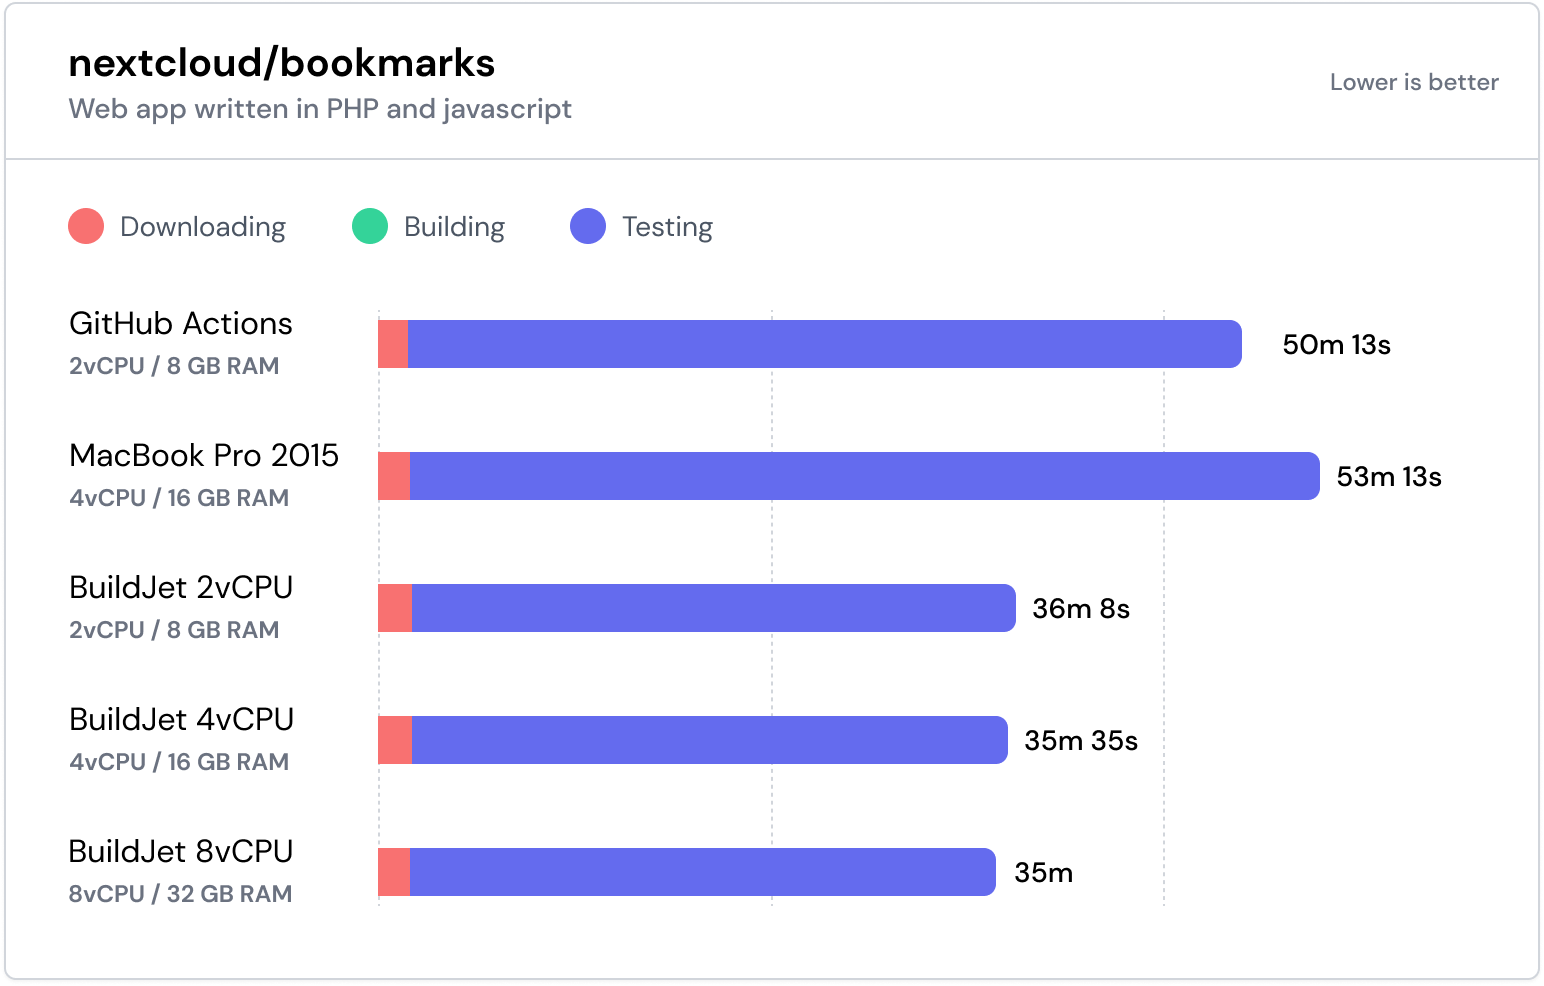 Comparison chart of the bookmark web app